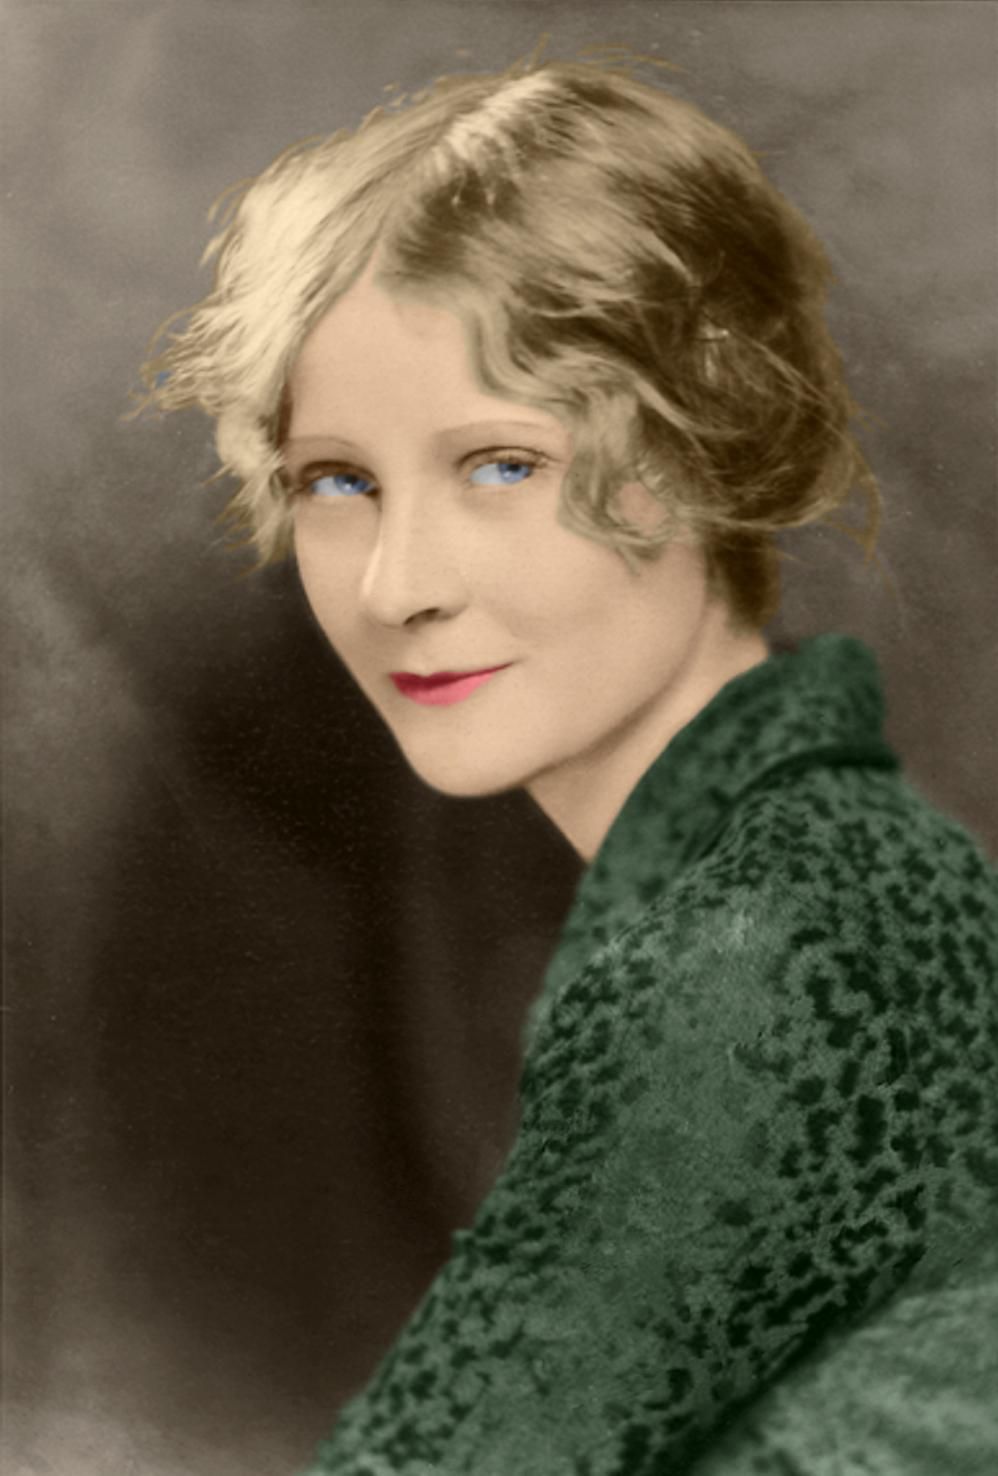 A 1929 photograph of Peg Entwistle